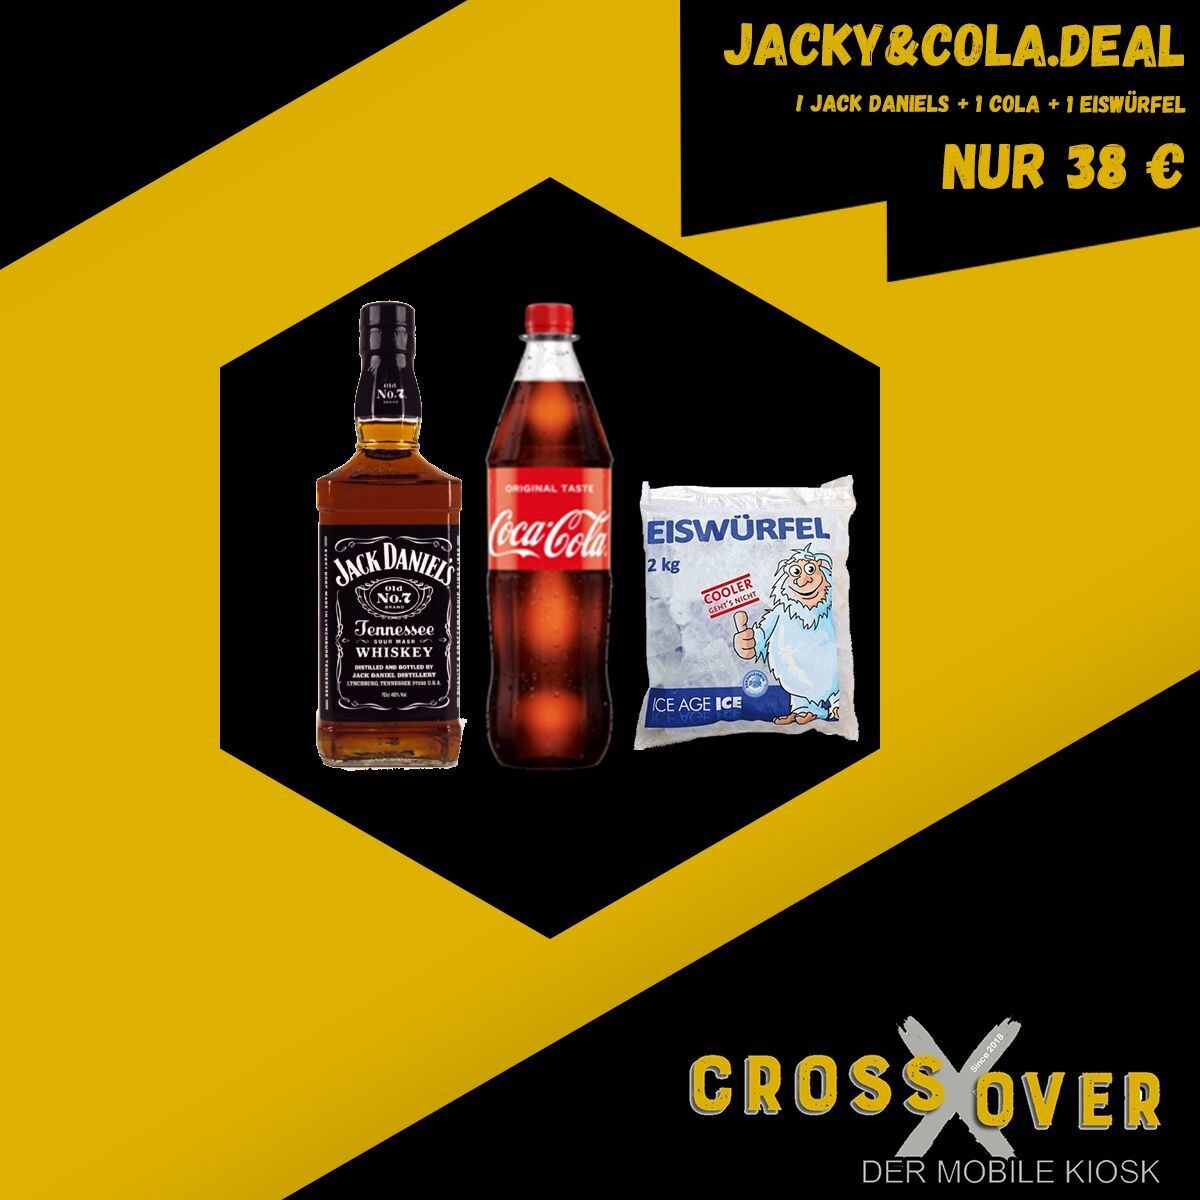 Jacky-Cola.deal